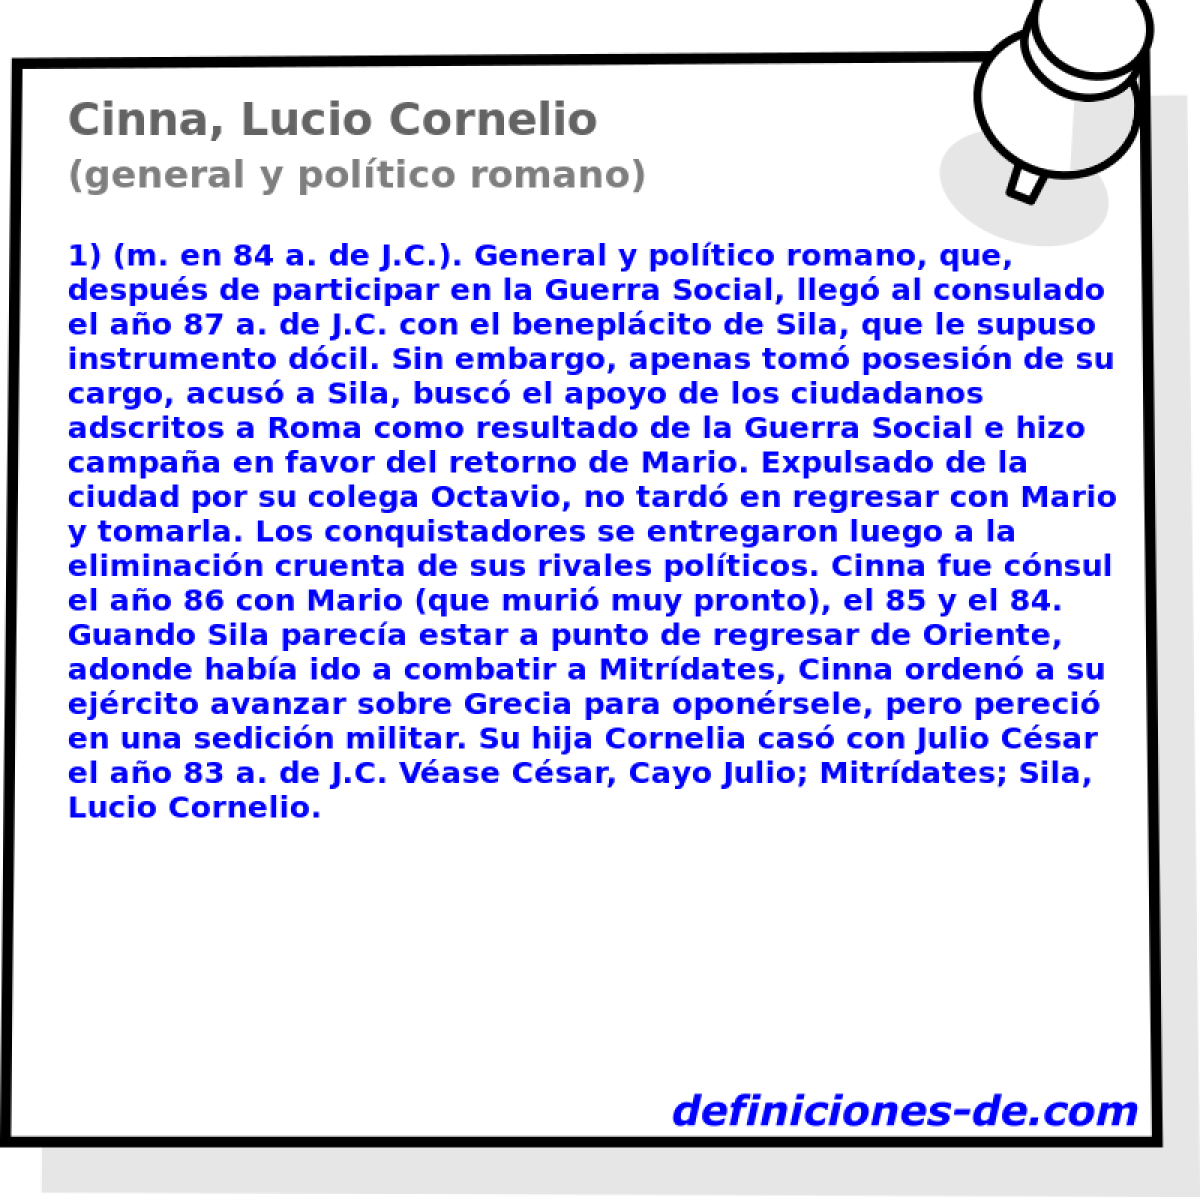 Cinna, Lucio Cornelio (general y poltico romano)